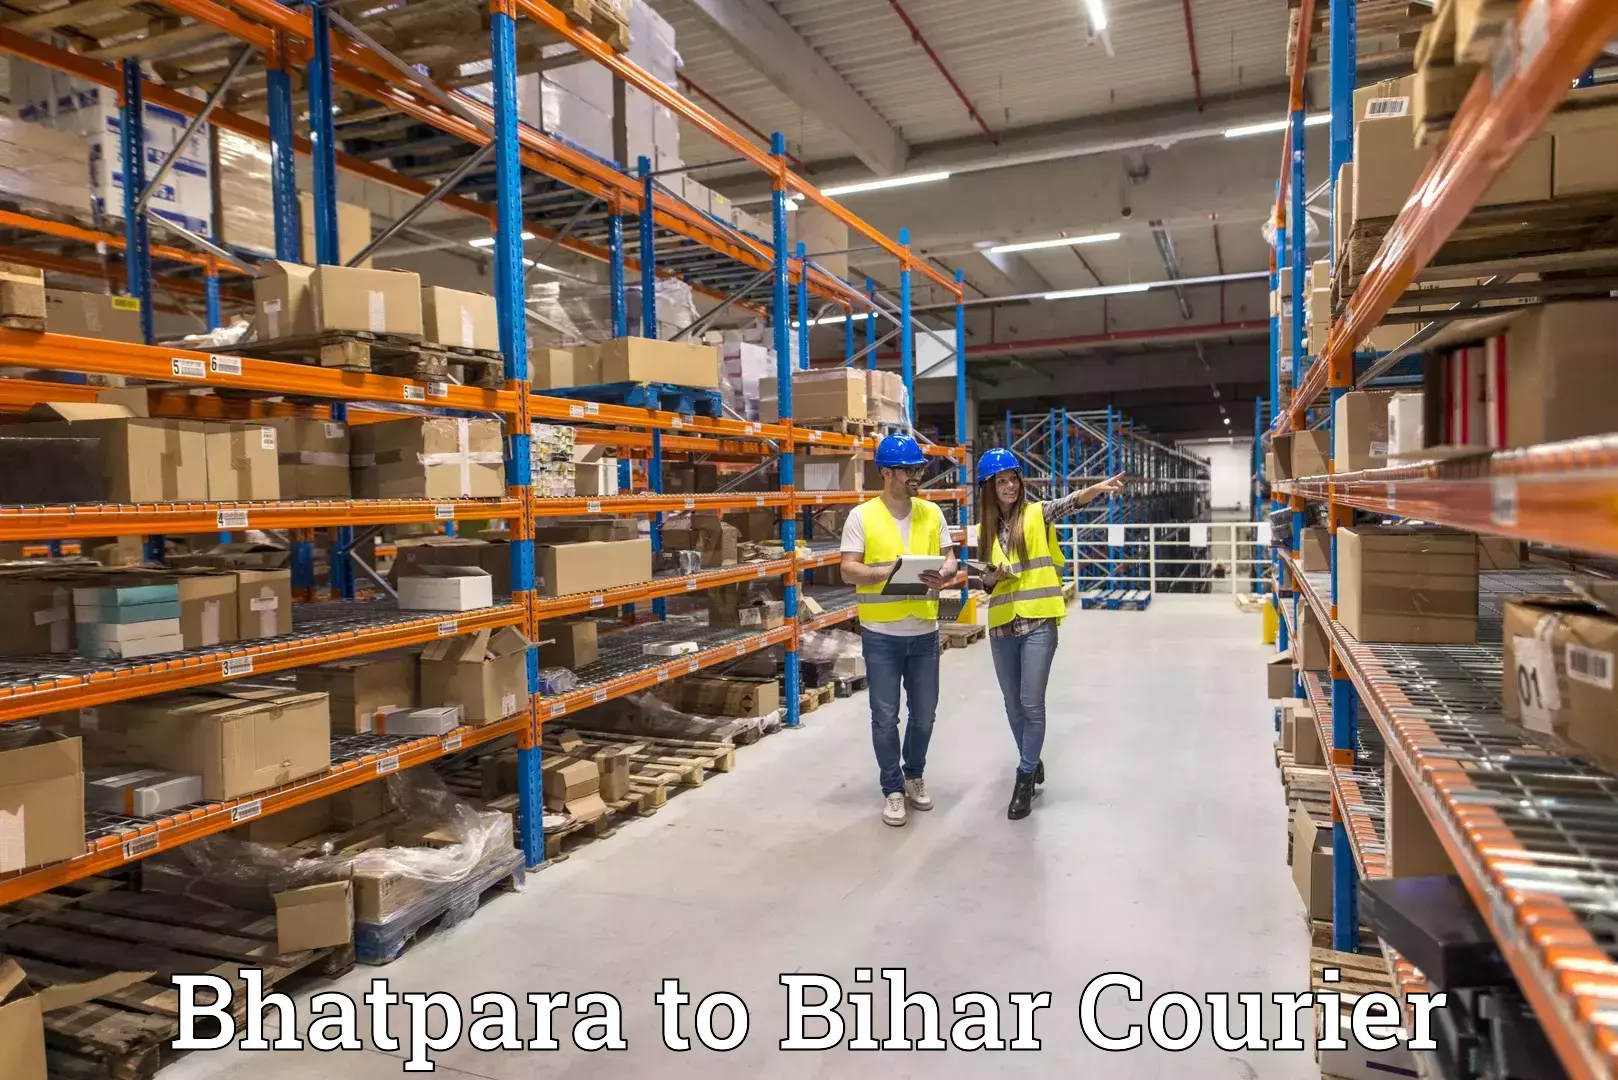 Seamless shipping experience Bhatpara to Khodaganj